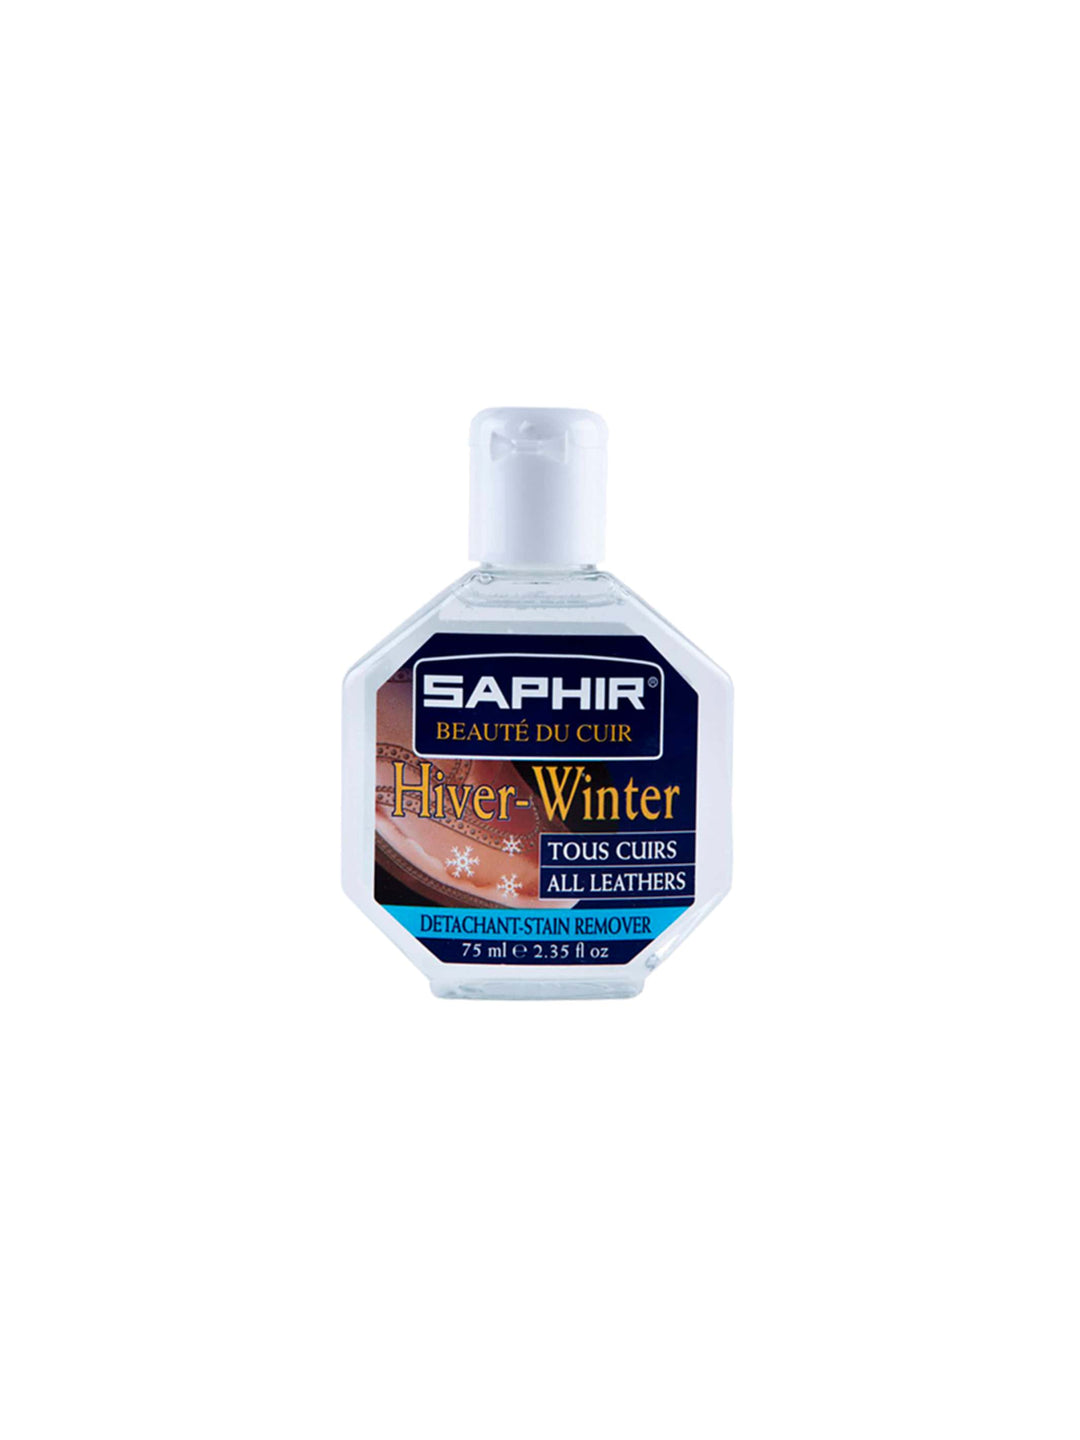 Saphir Hiver Winter salt remover